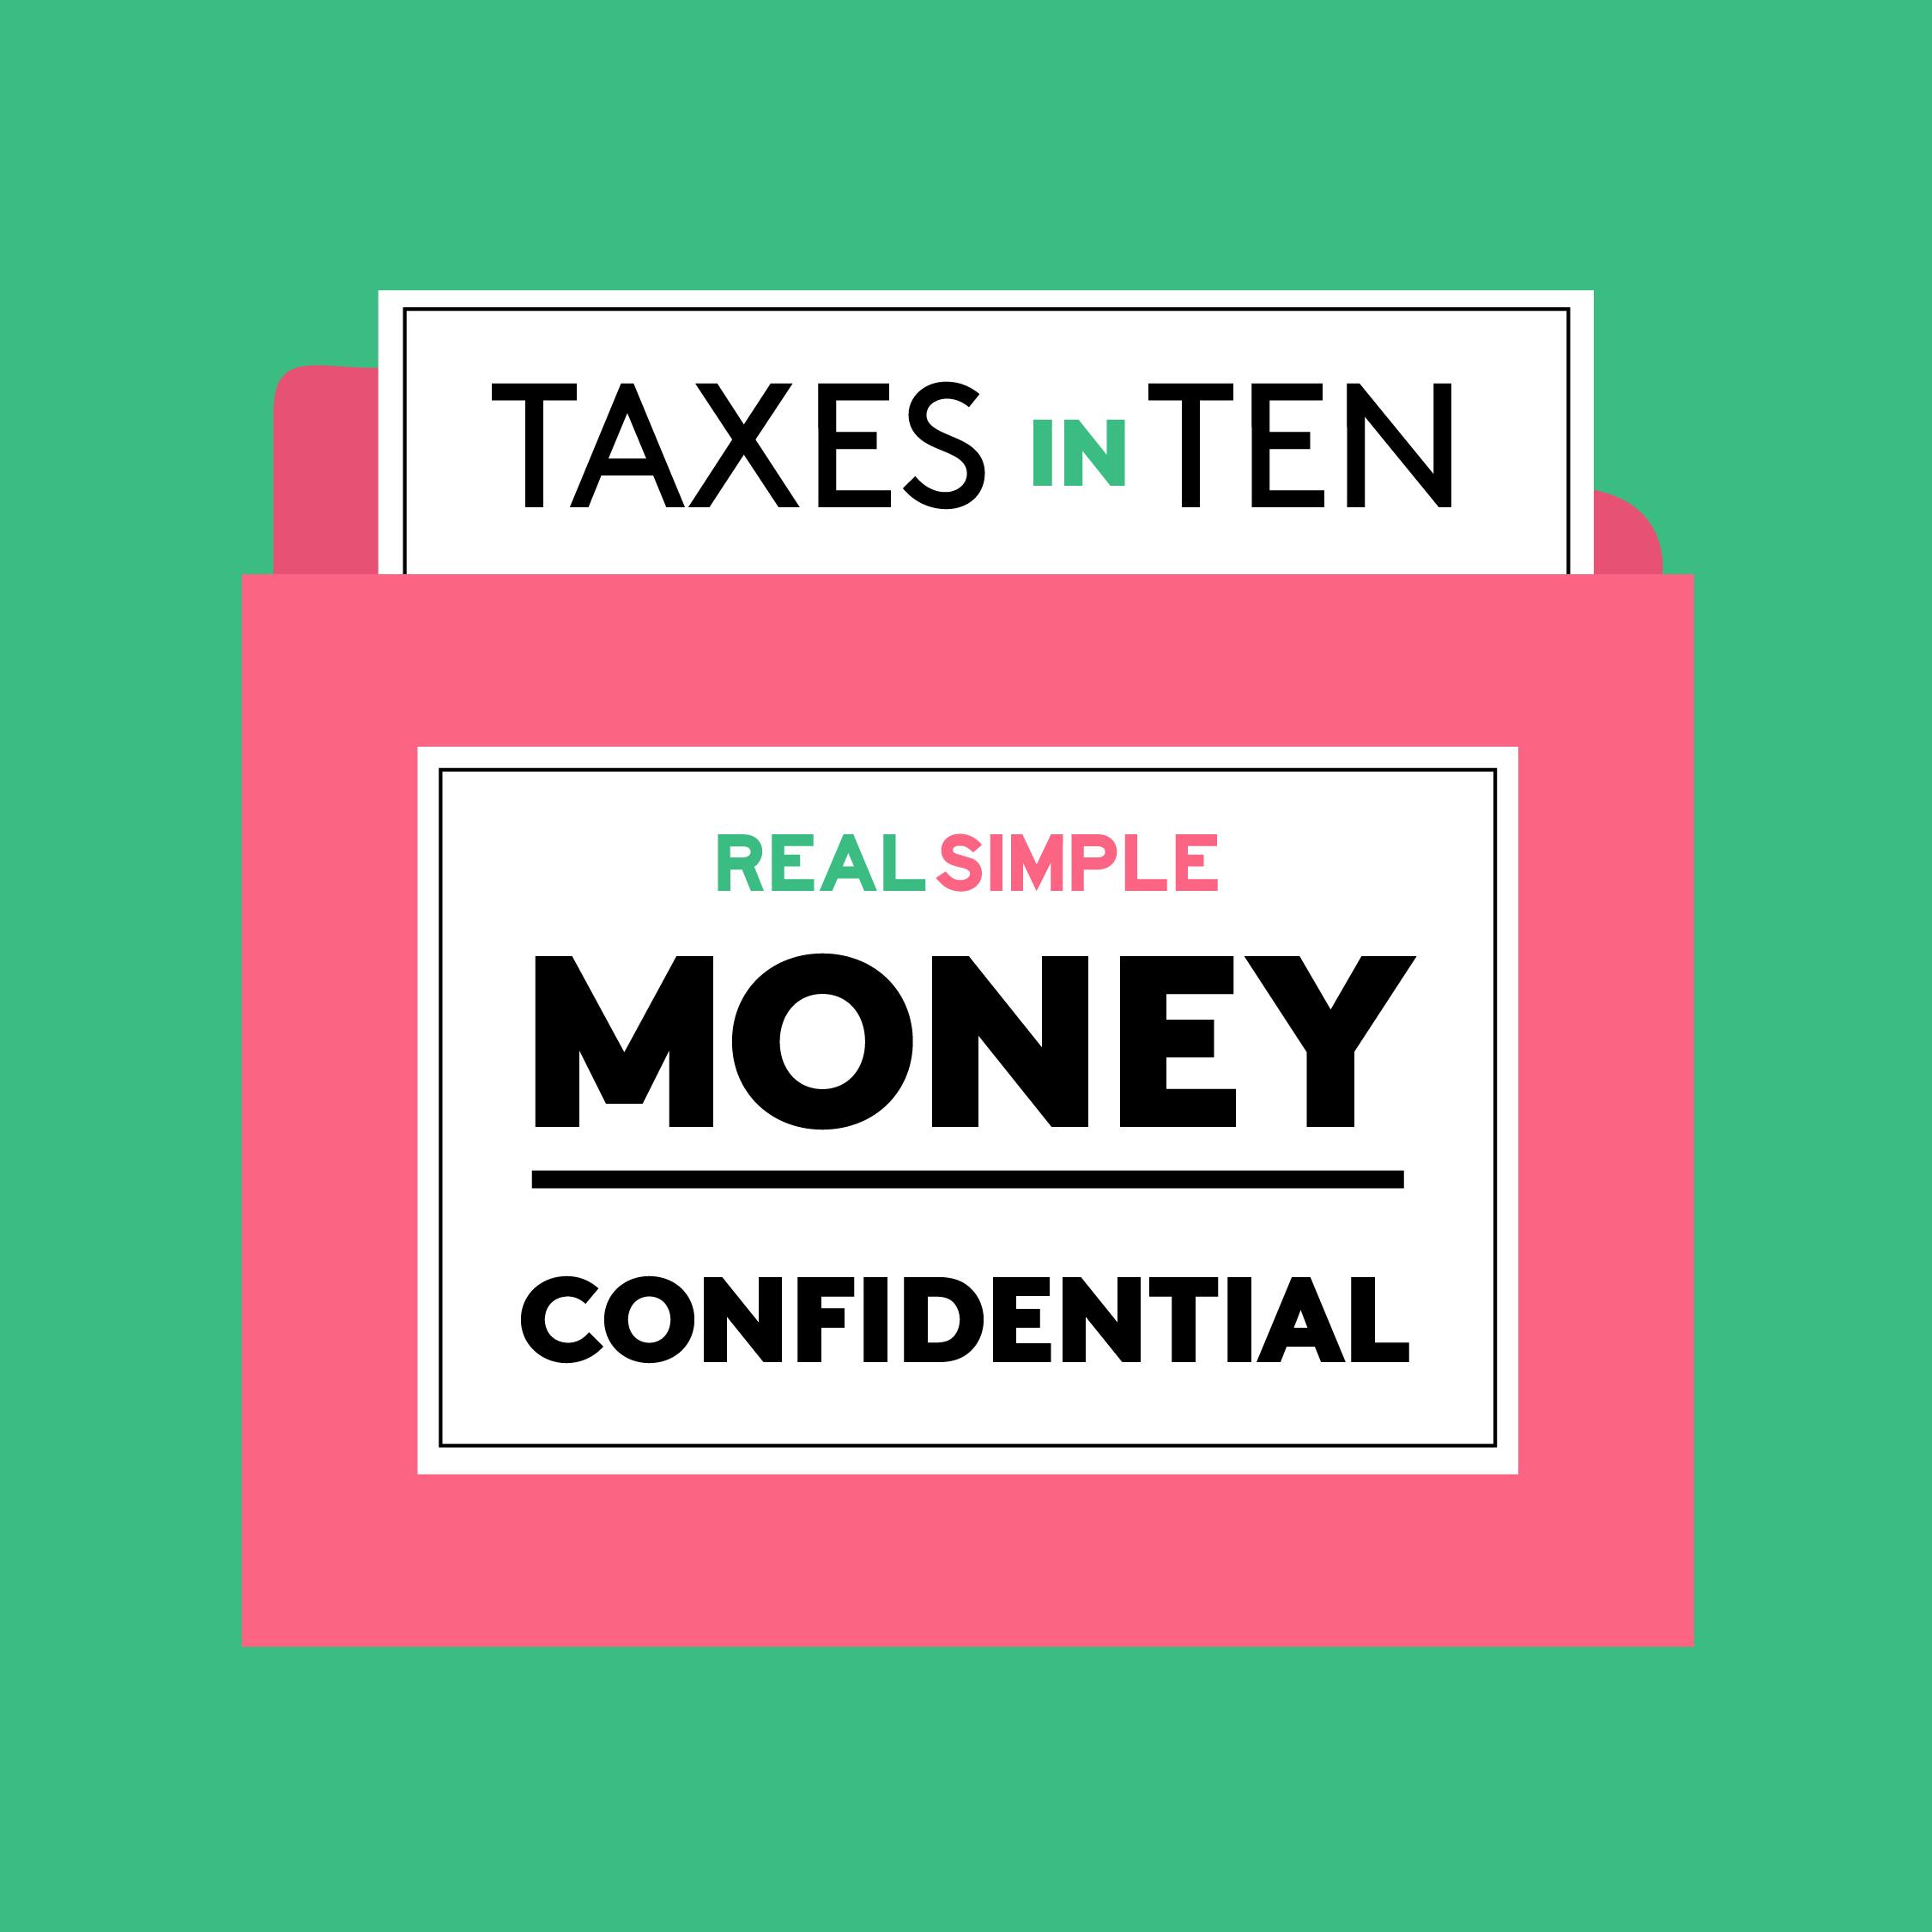 How Do I Avoid Penalties and Maximize My Tax Refund?